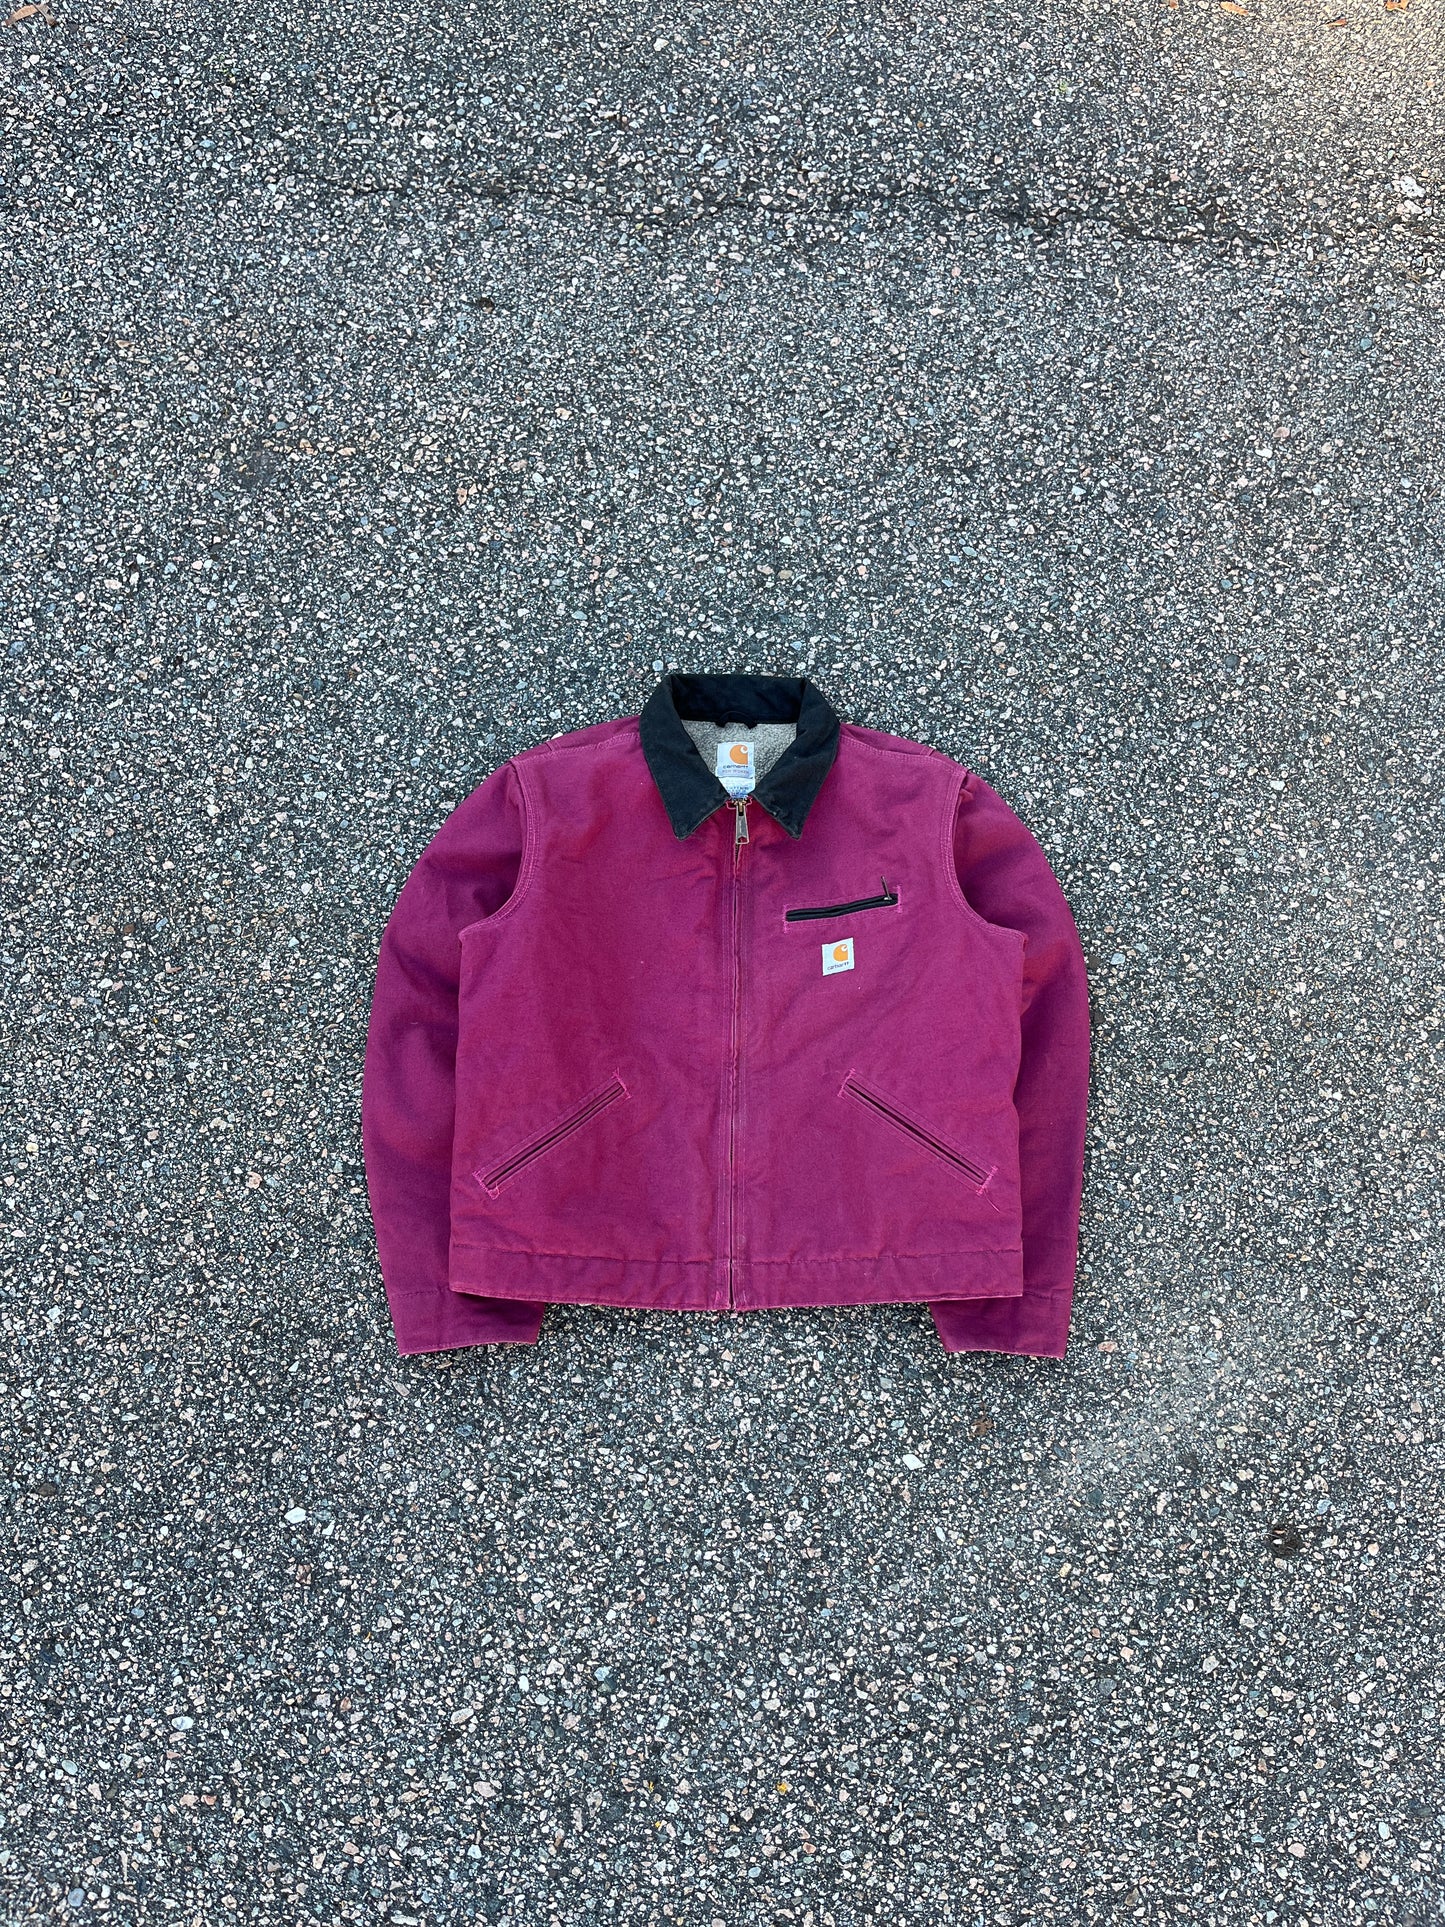 Faded Raspberry Carhartt Detroit Jacket - Small